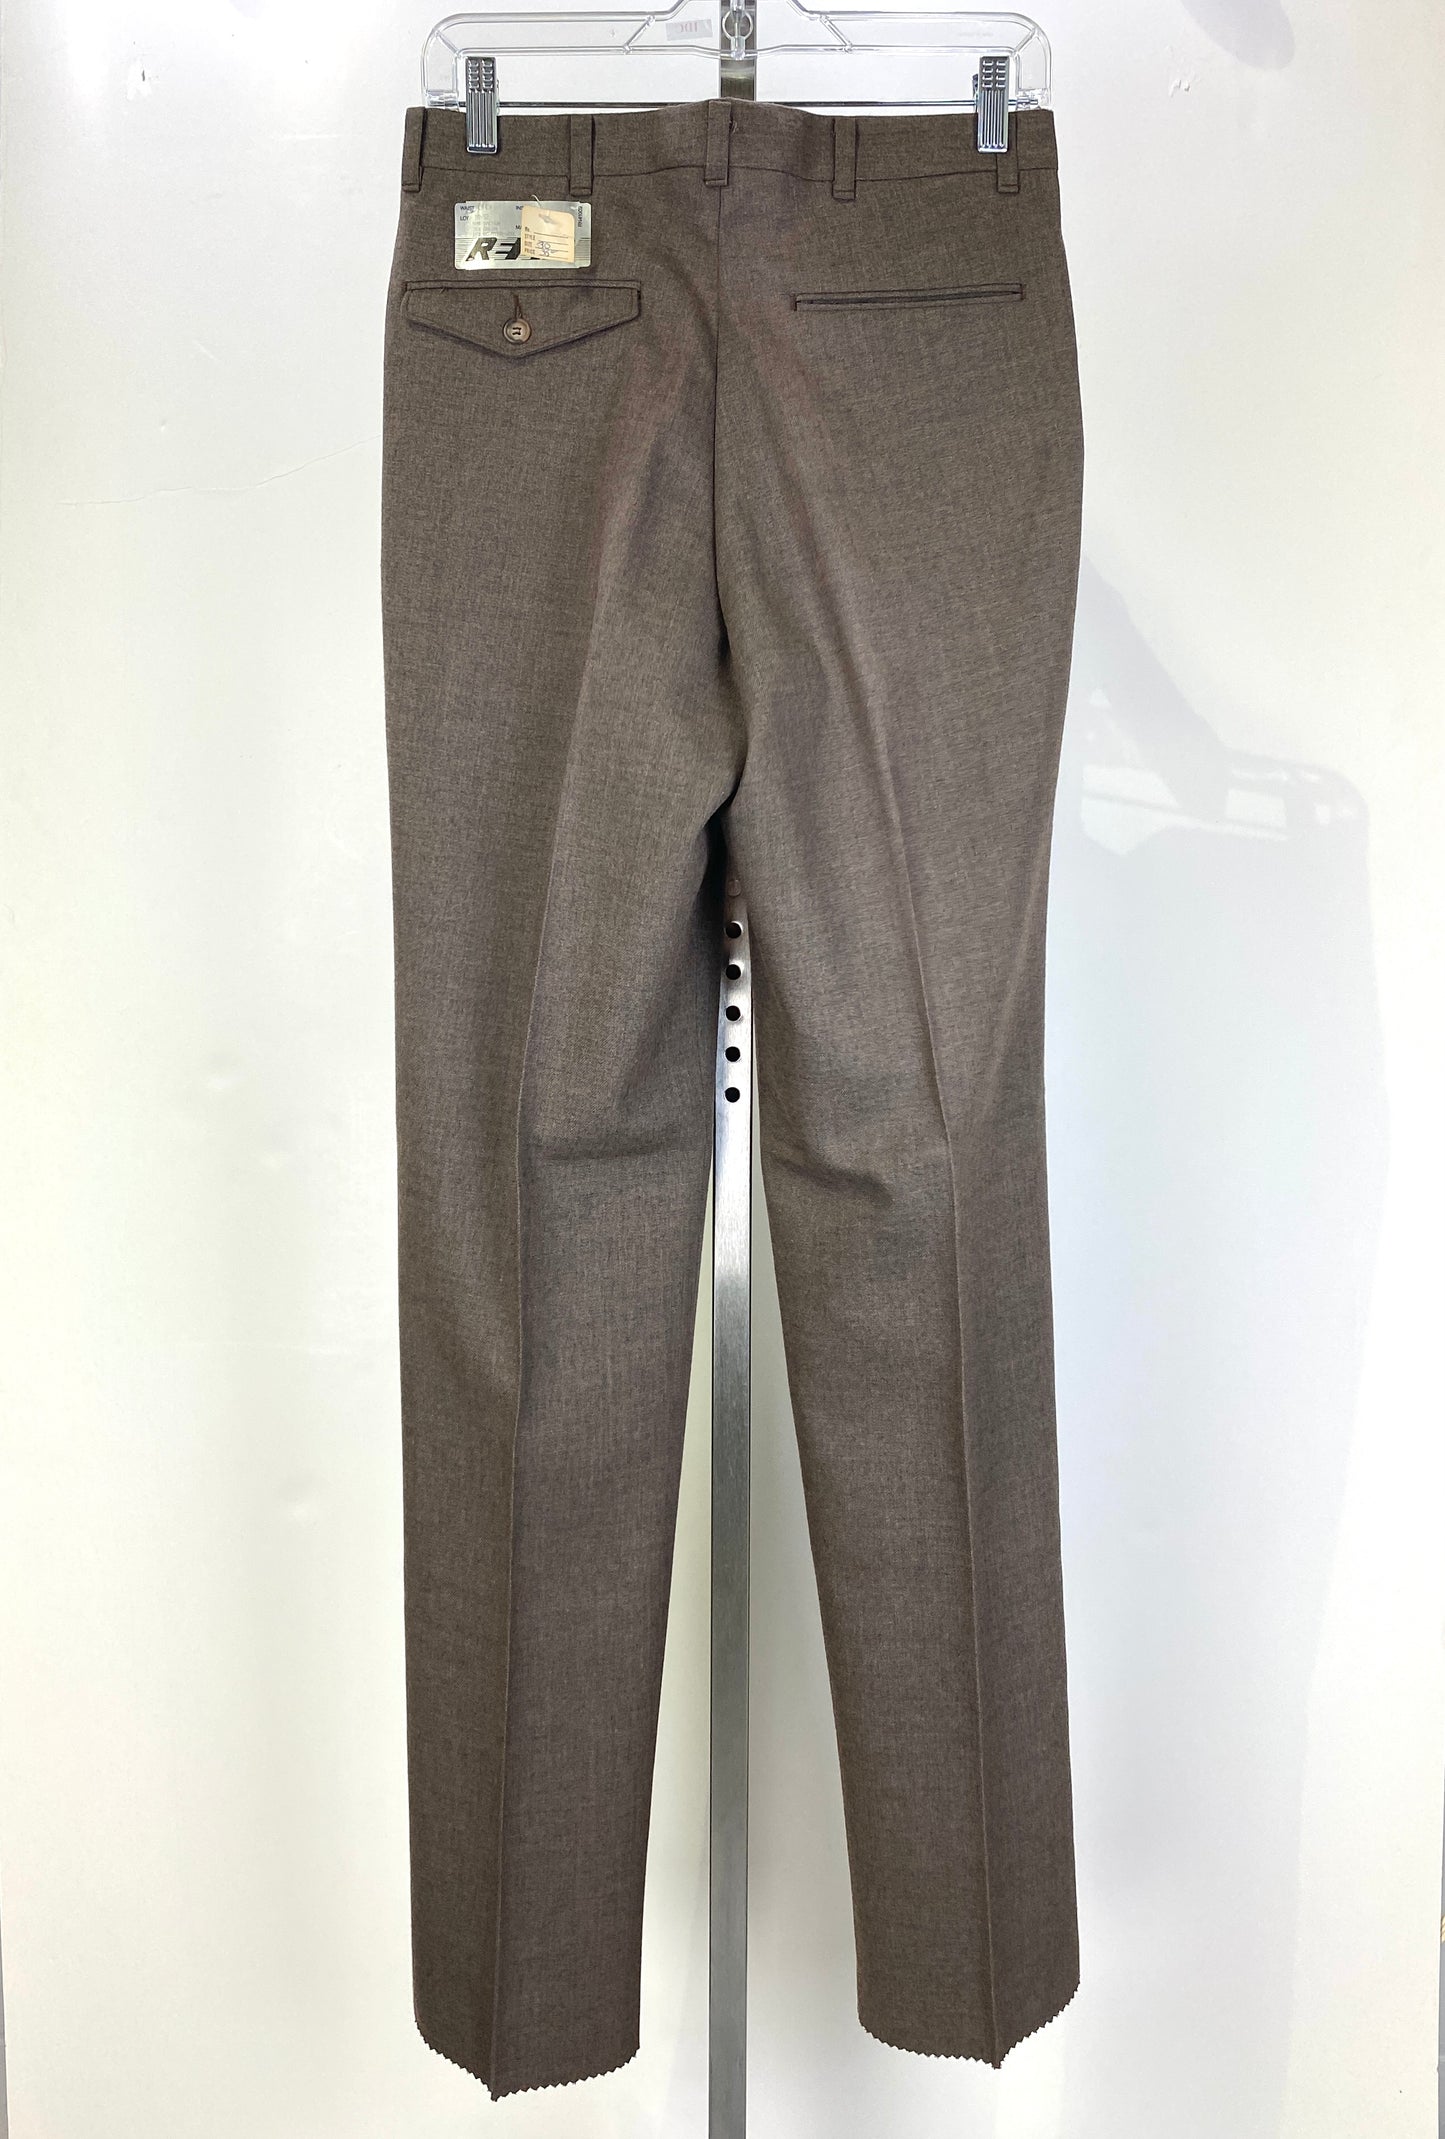 Vintage 1970s Deadstock Slacks, Men's Brown Polywool Trousers, NOS